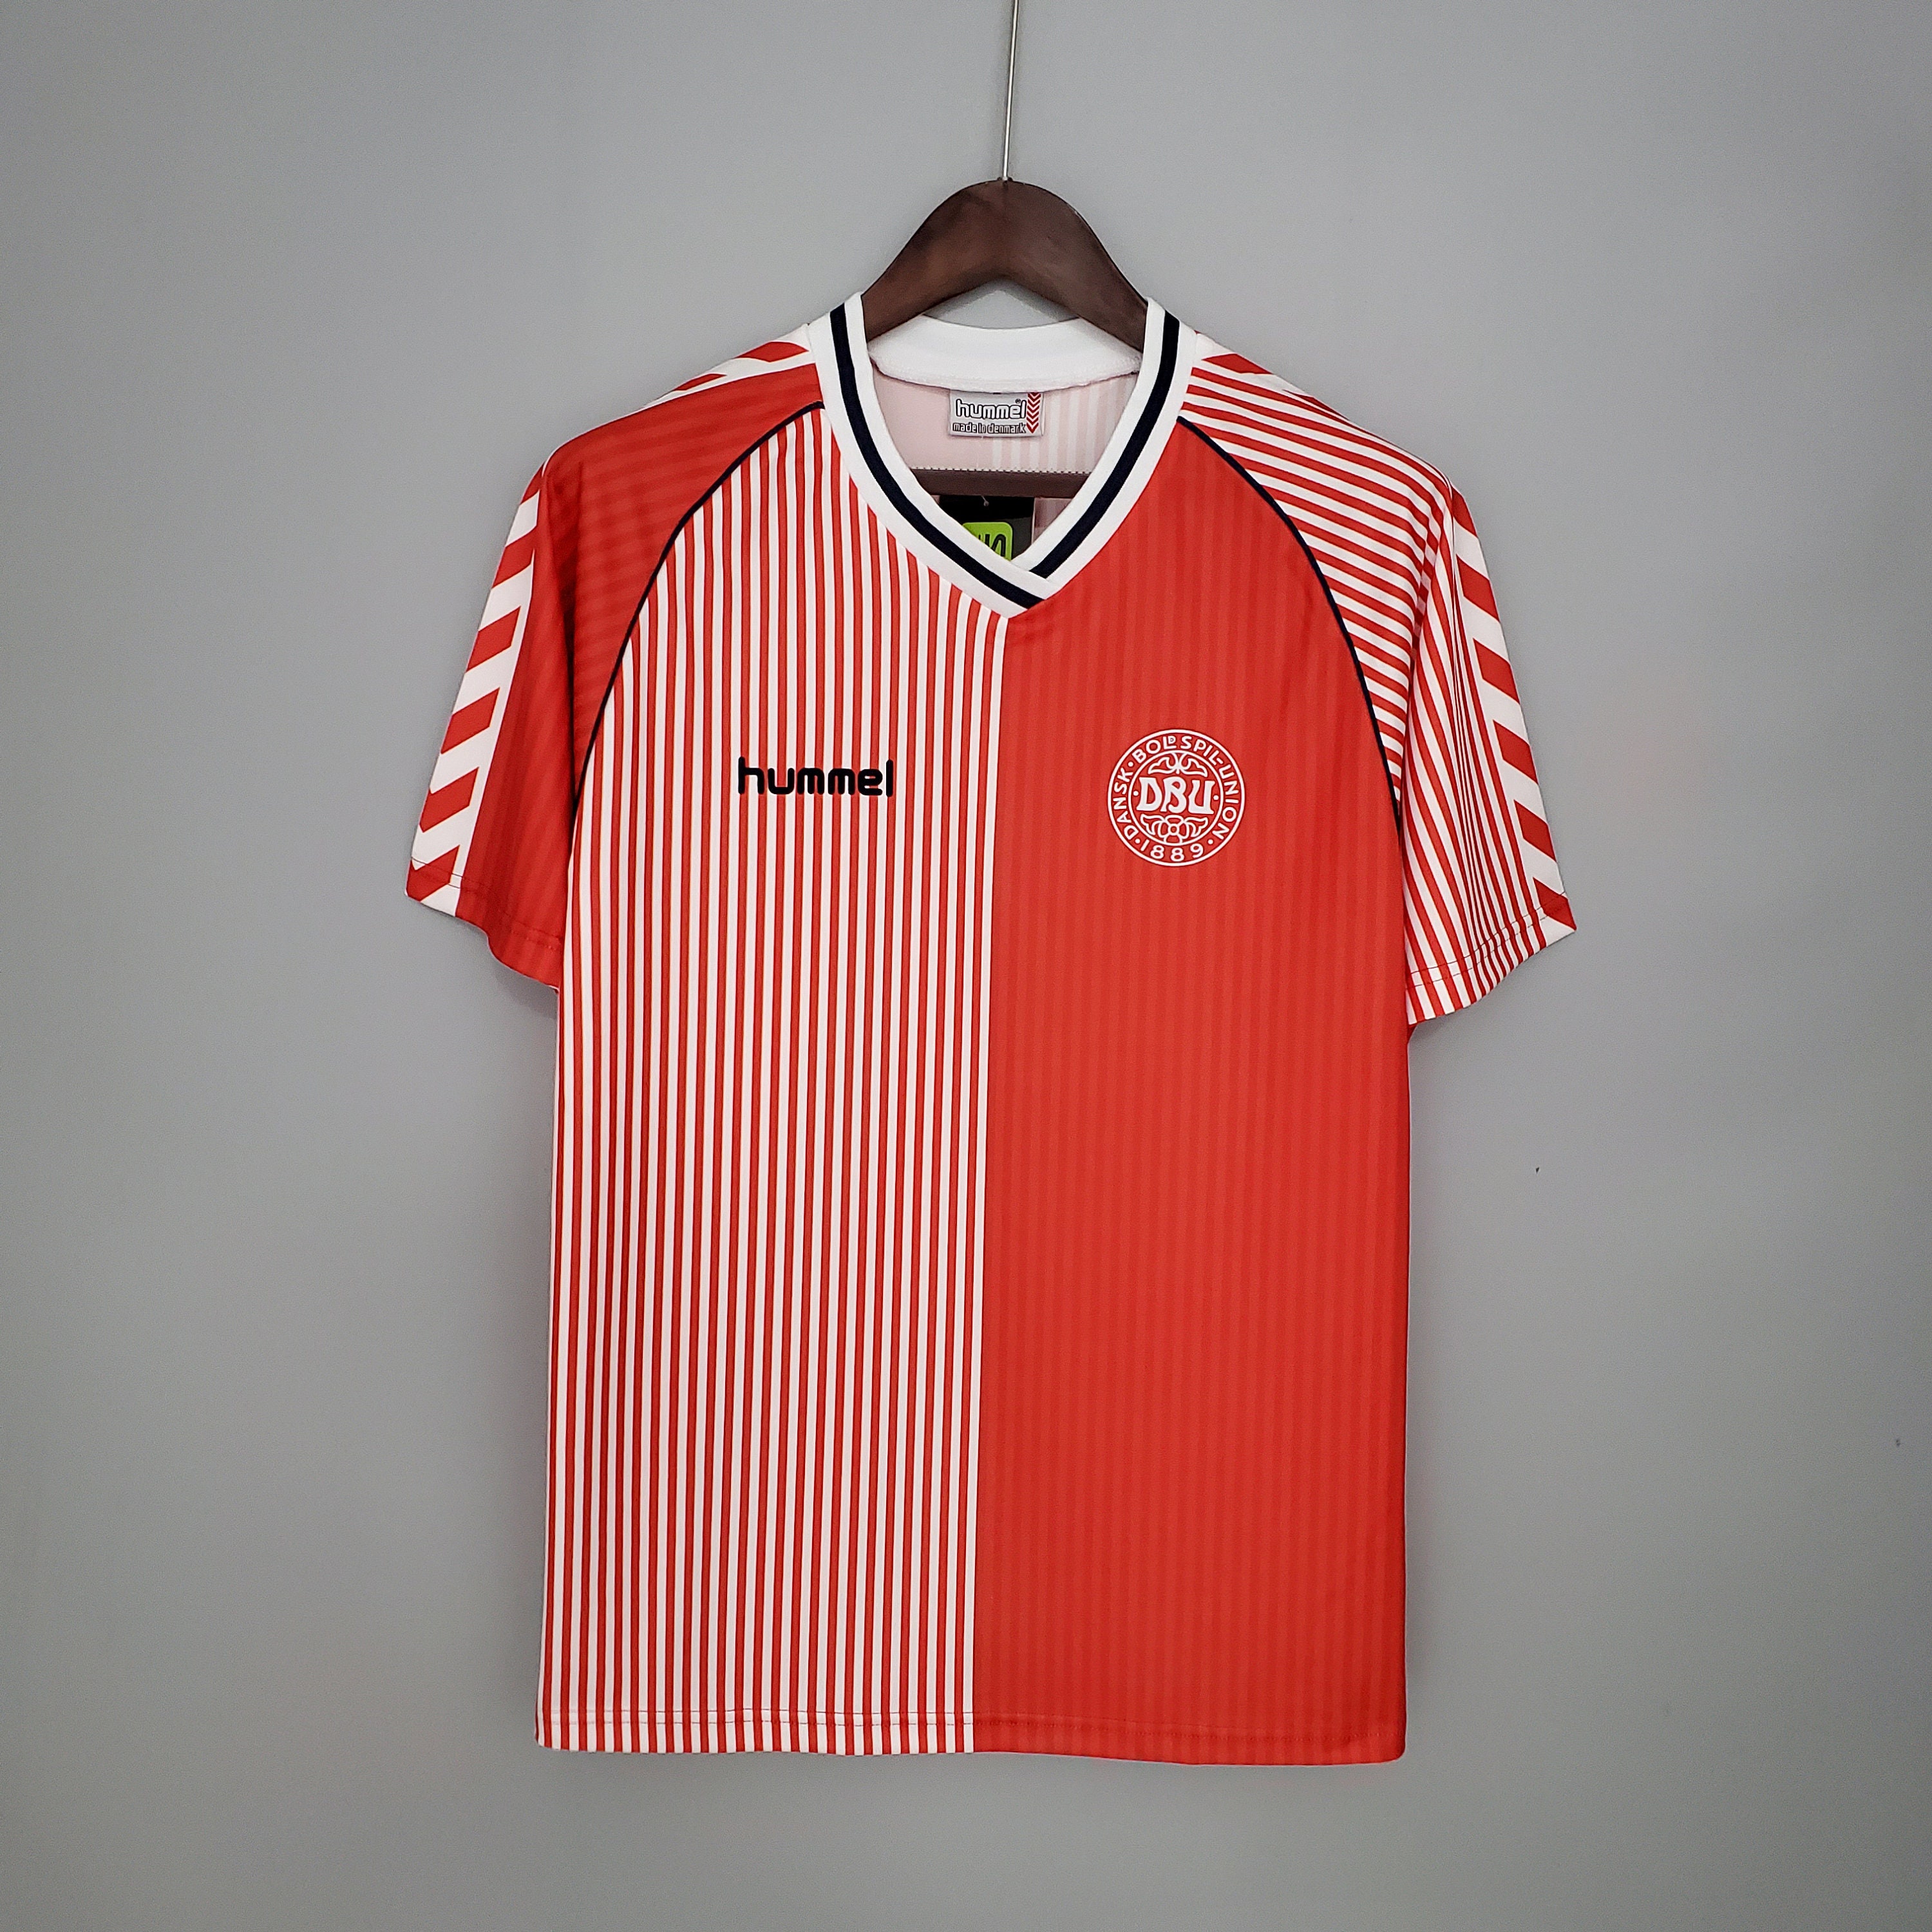 Canada National Team Football Shirt 1986 World Cup Retro Jersey